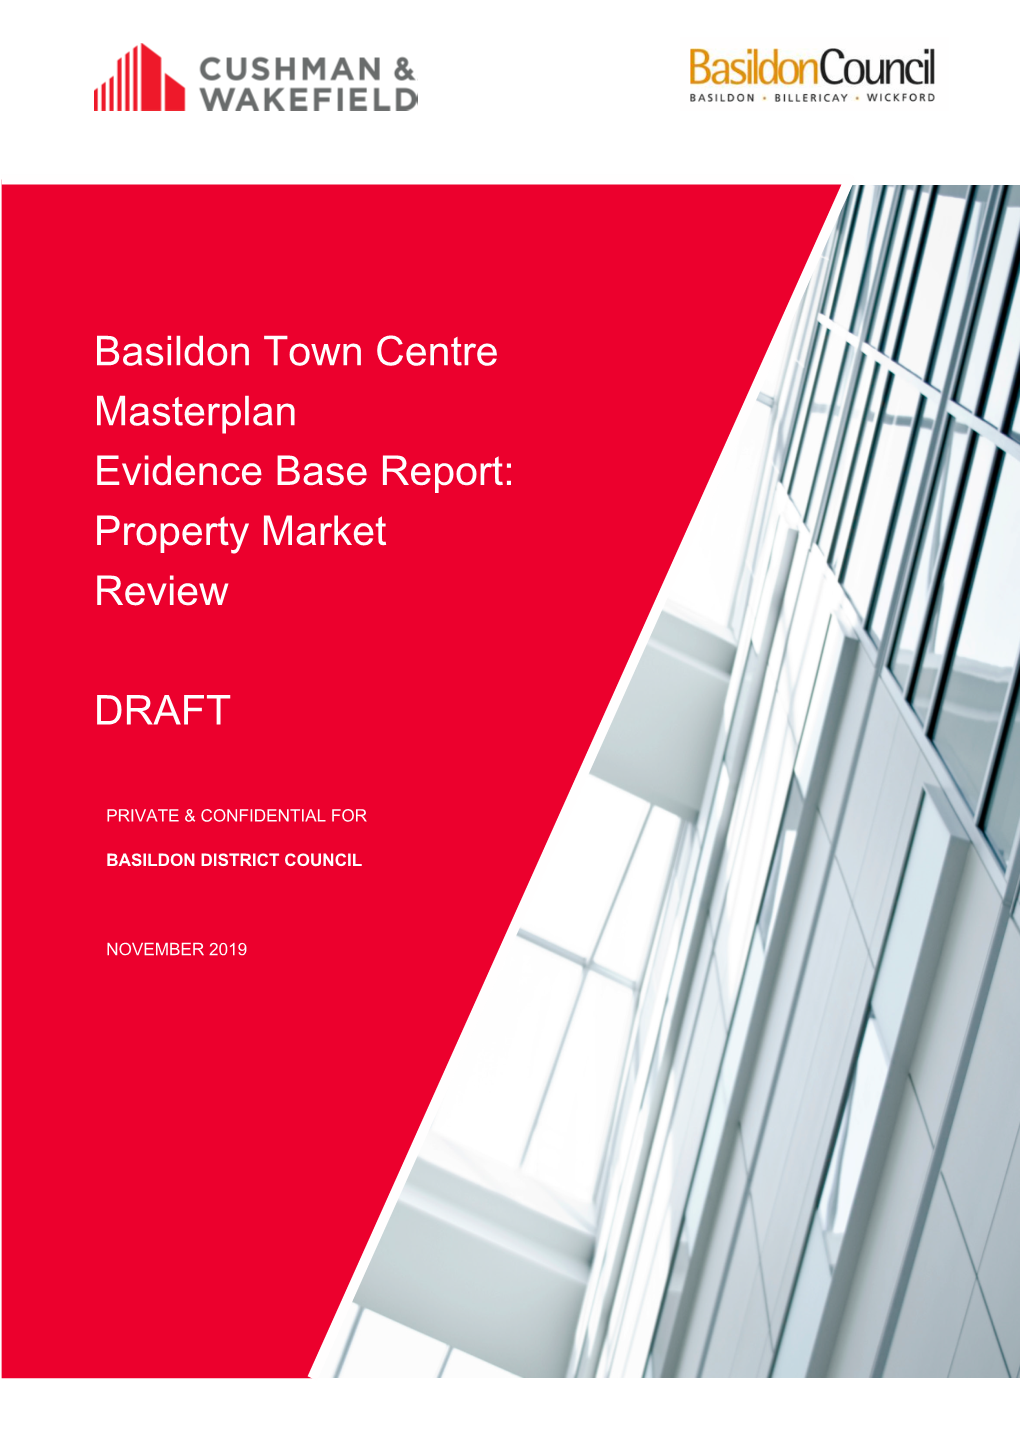 Basildon Town Centre Masterplan Evidence Base Report: Property Market Review